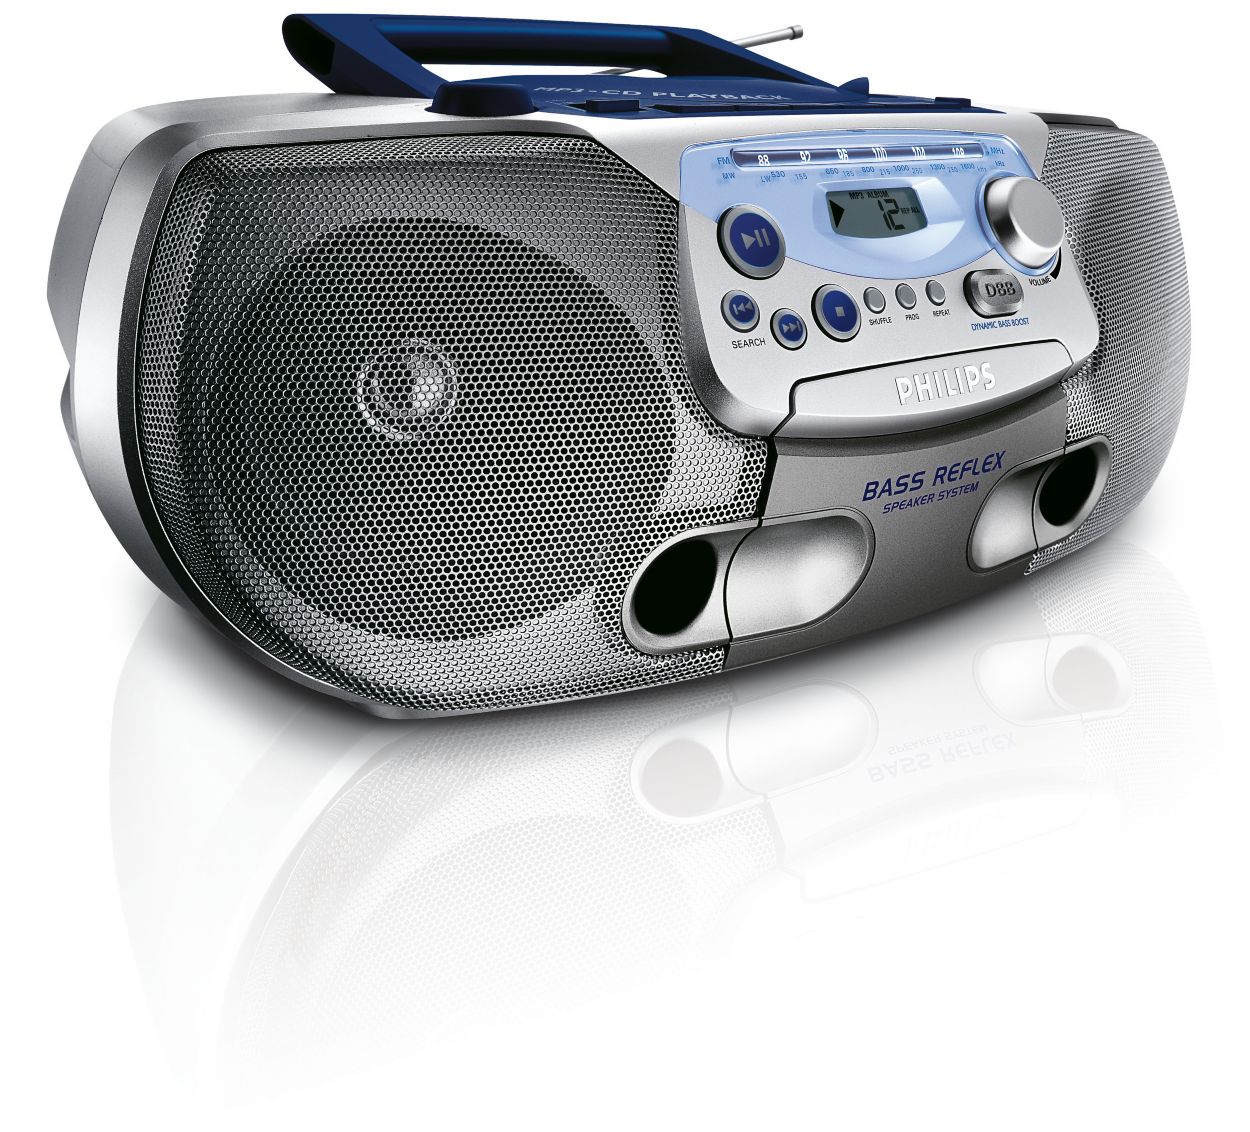 Reproductor CD/MP3 Philips CD Soundmachine – Domo en casa